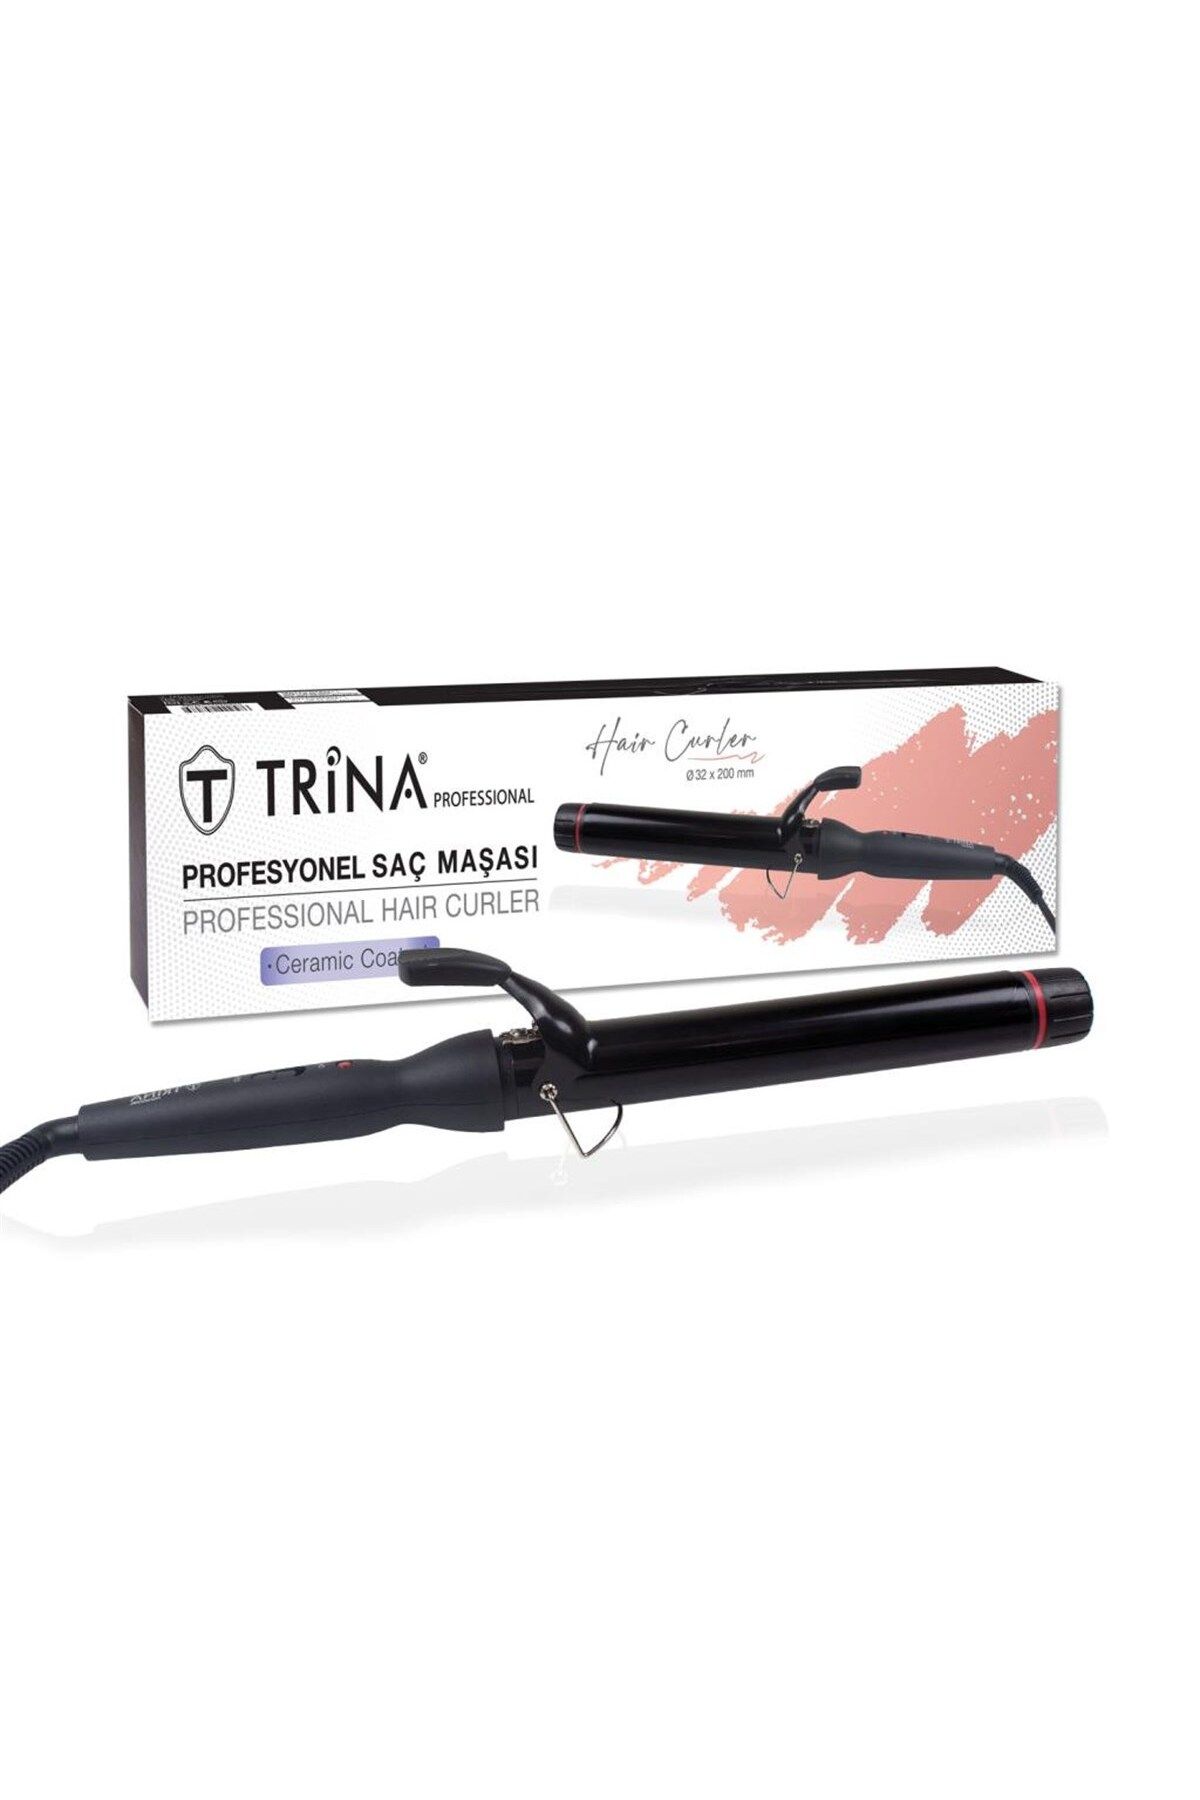 Trina Profesyonel Saç Maşası 32 Mm - 48